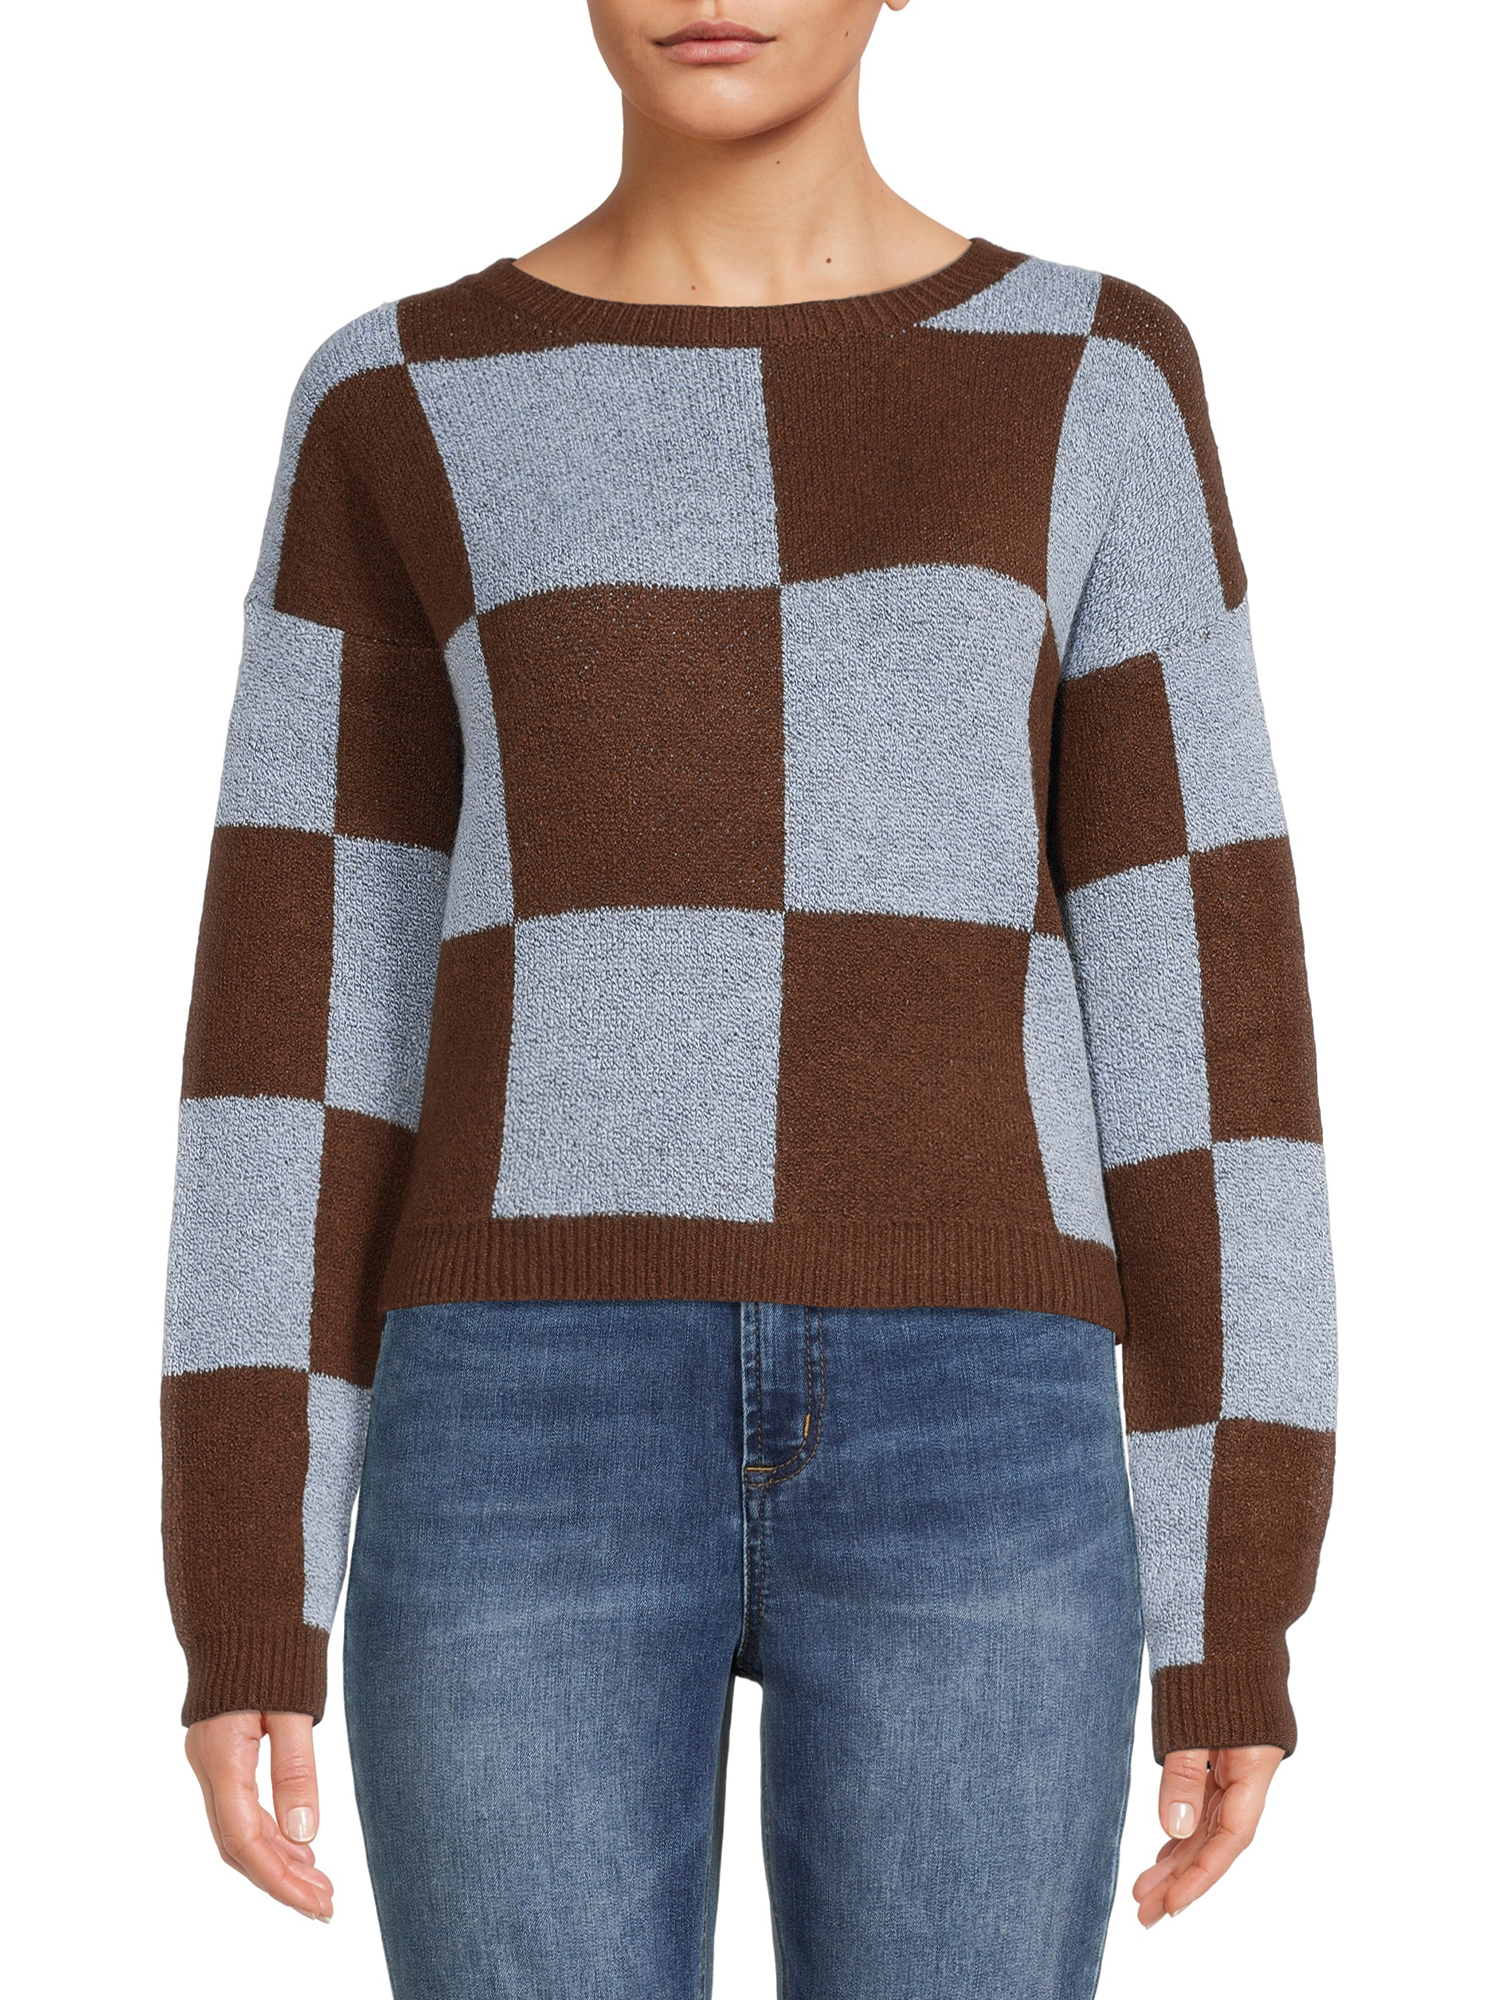 No Boundaries Junior's Jacquard Pullover Sweater - image 1 of 5